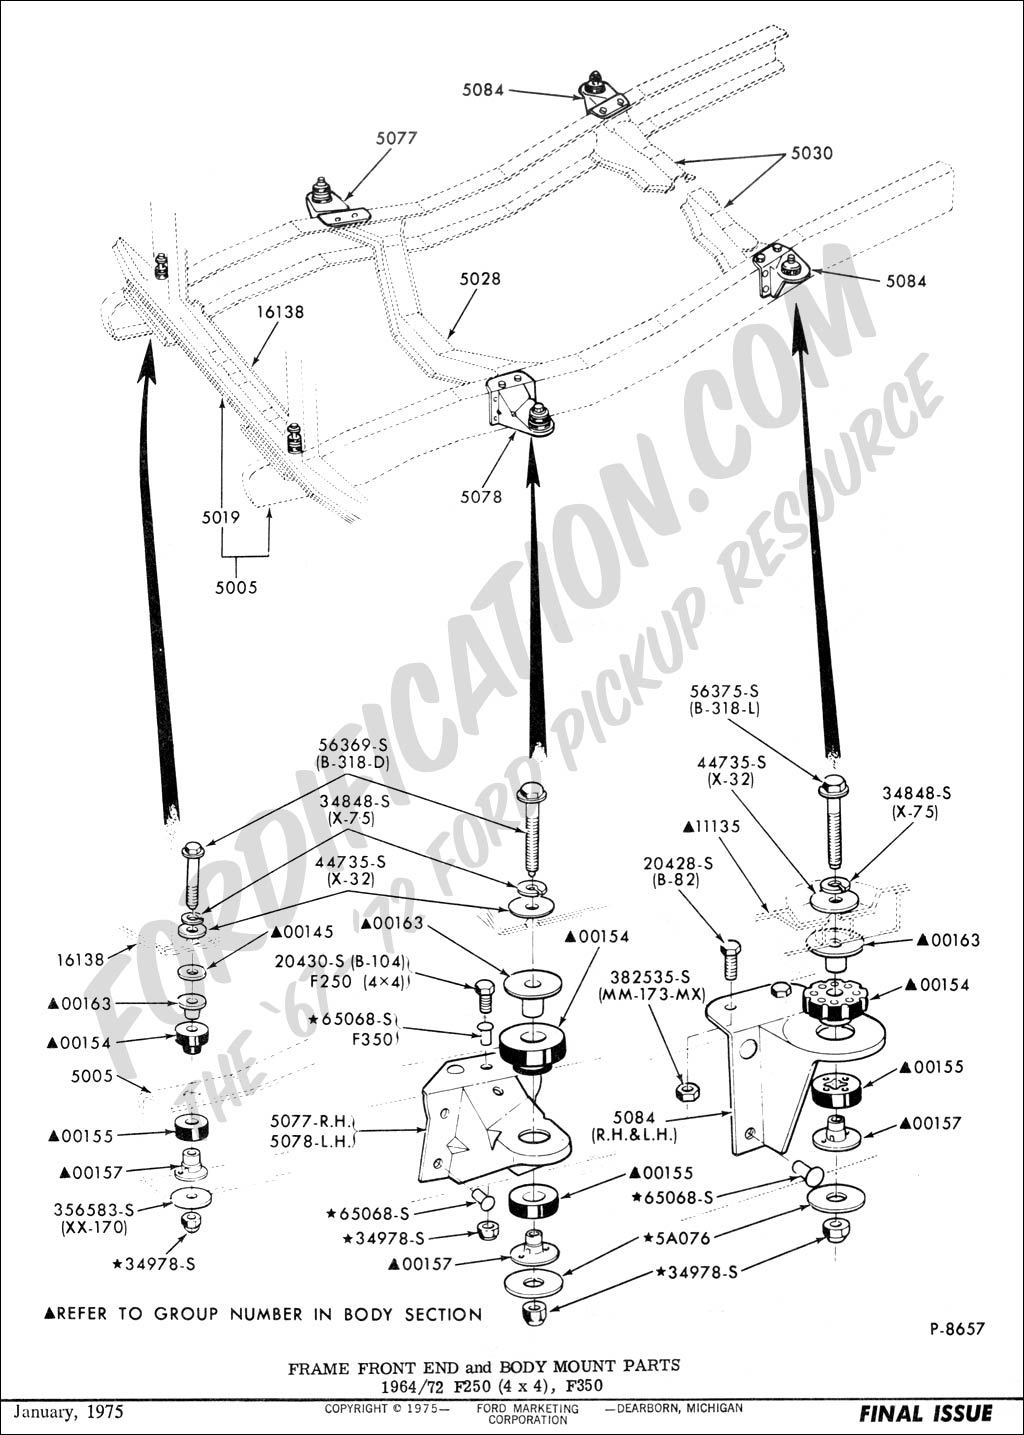 [DIAGRAM] 1972 Ford F350 Wiring Diagram FULL Version HD Quality Wiring